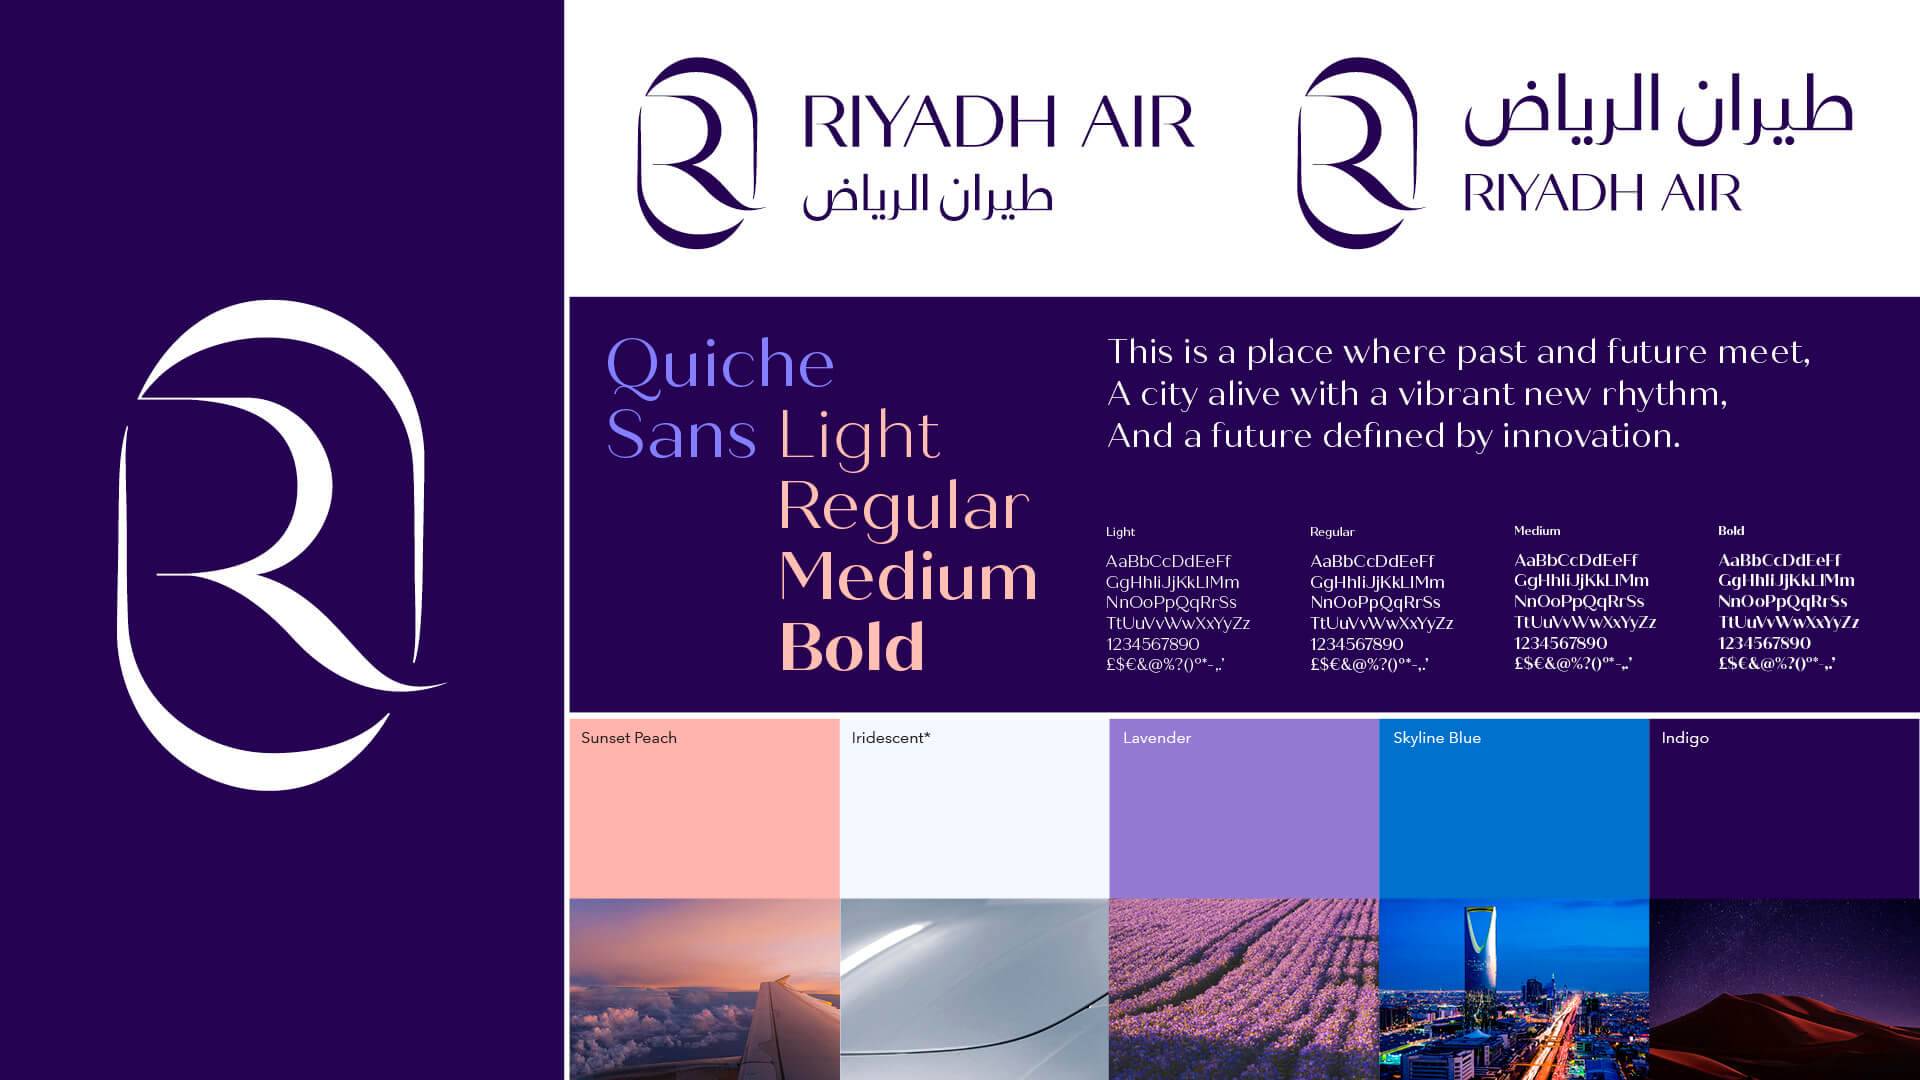 brand pillars, logo, font selection and colour choice for Riyadh Air